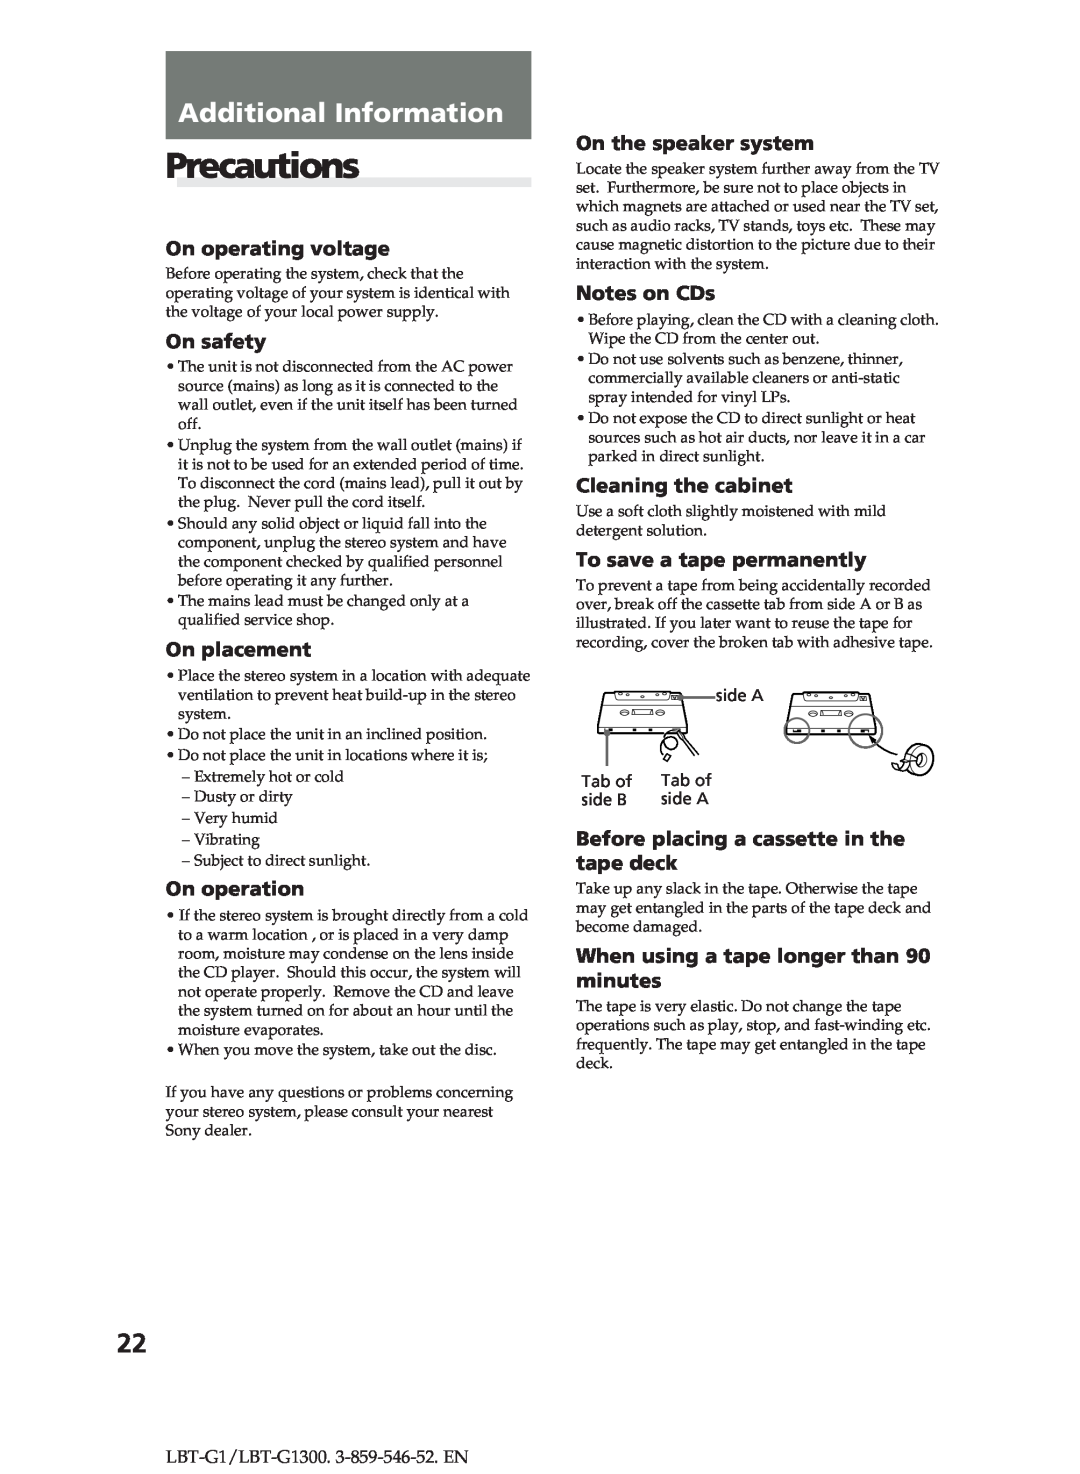 Sony LBT-G1300 manual Precautions, Additional Information 